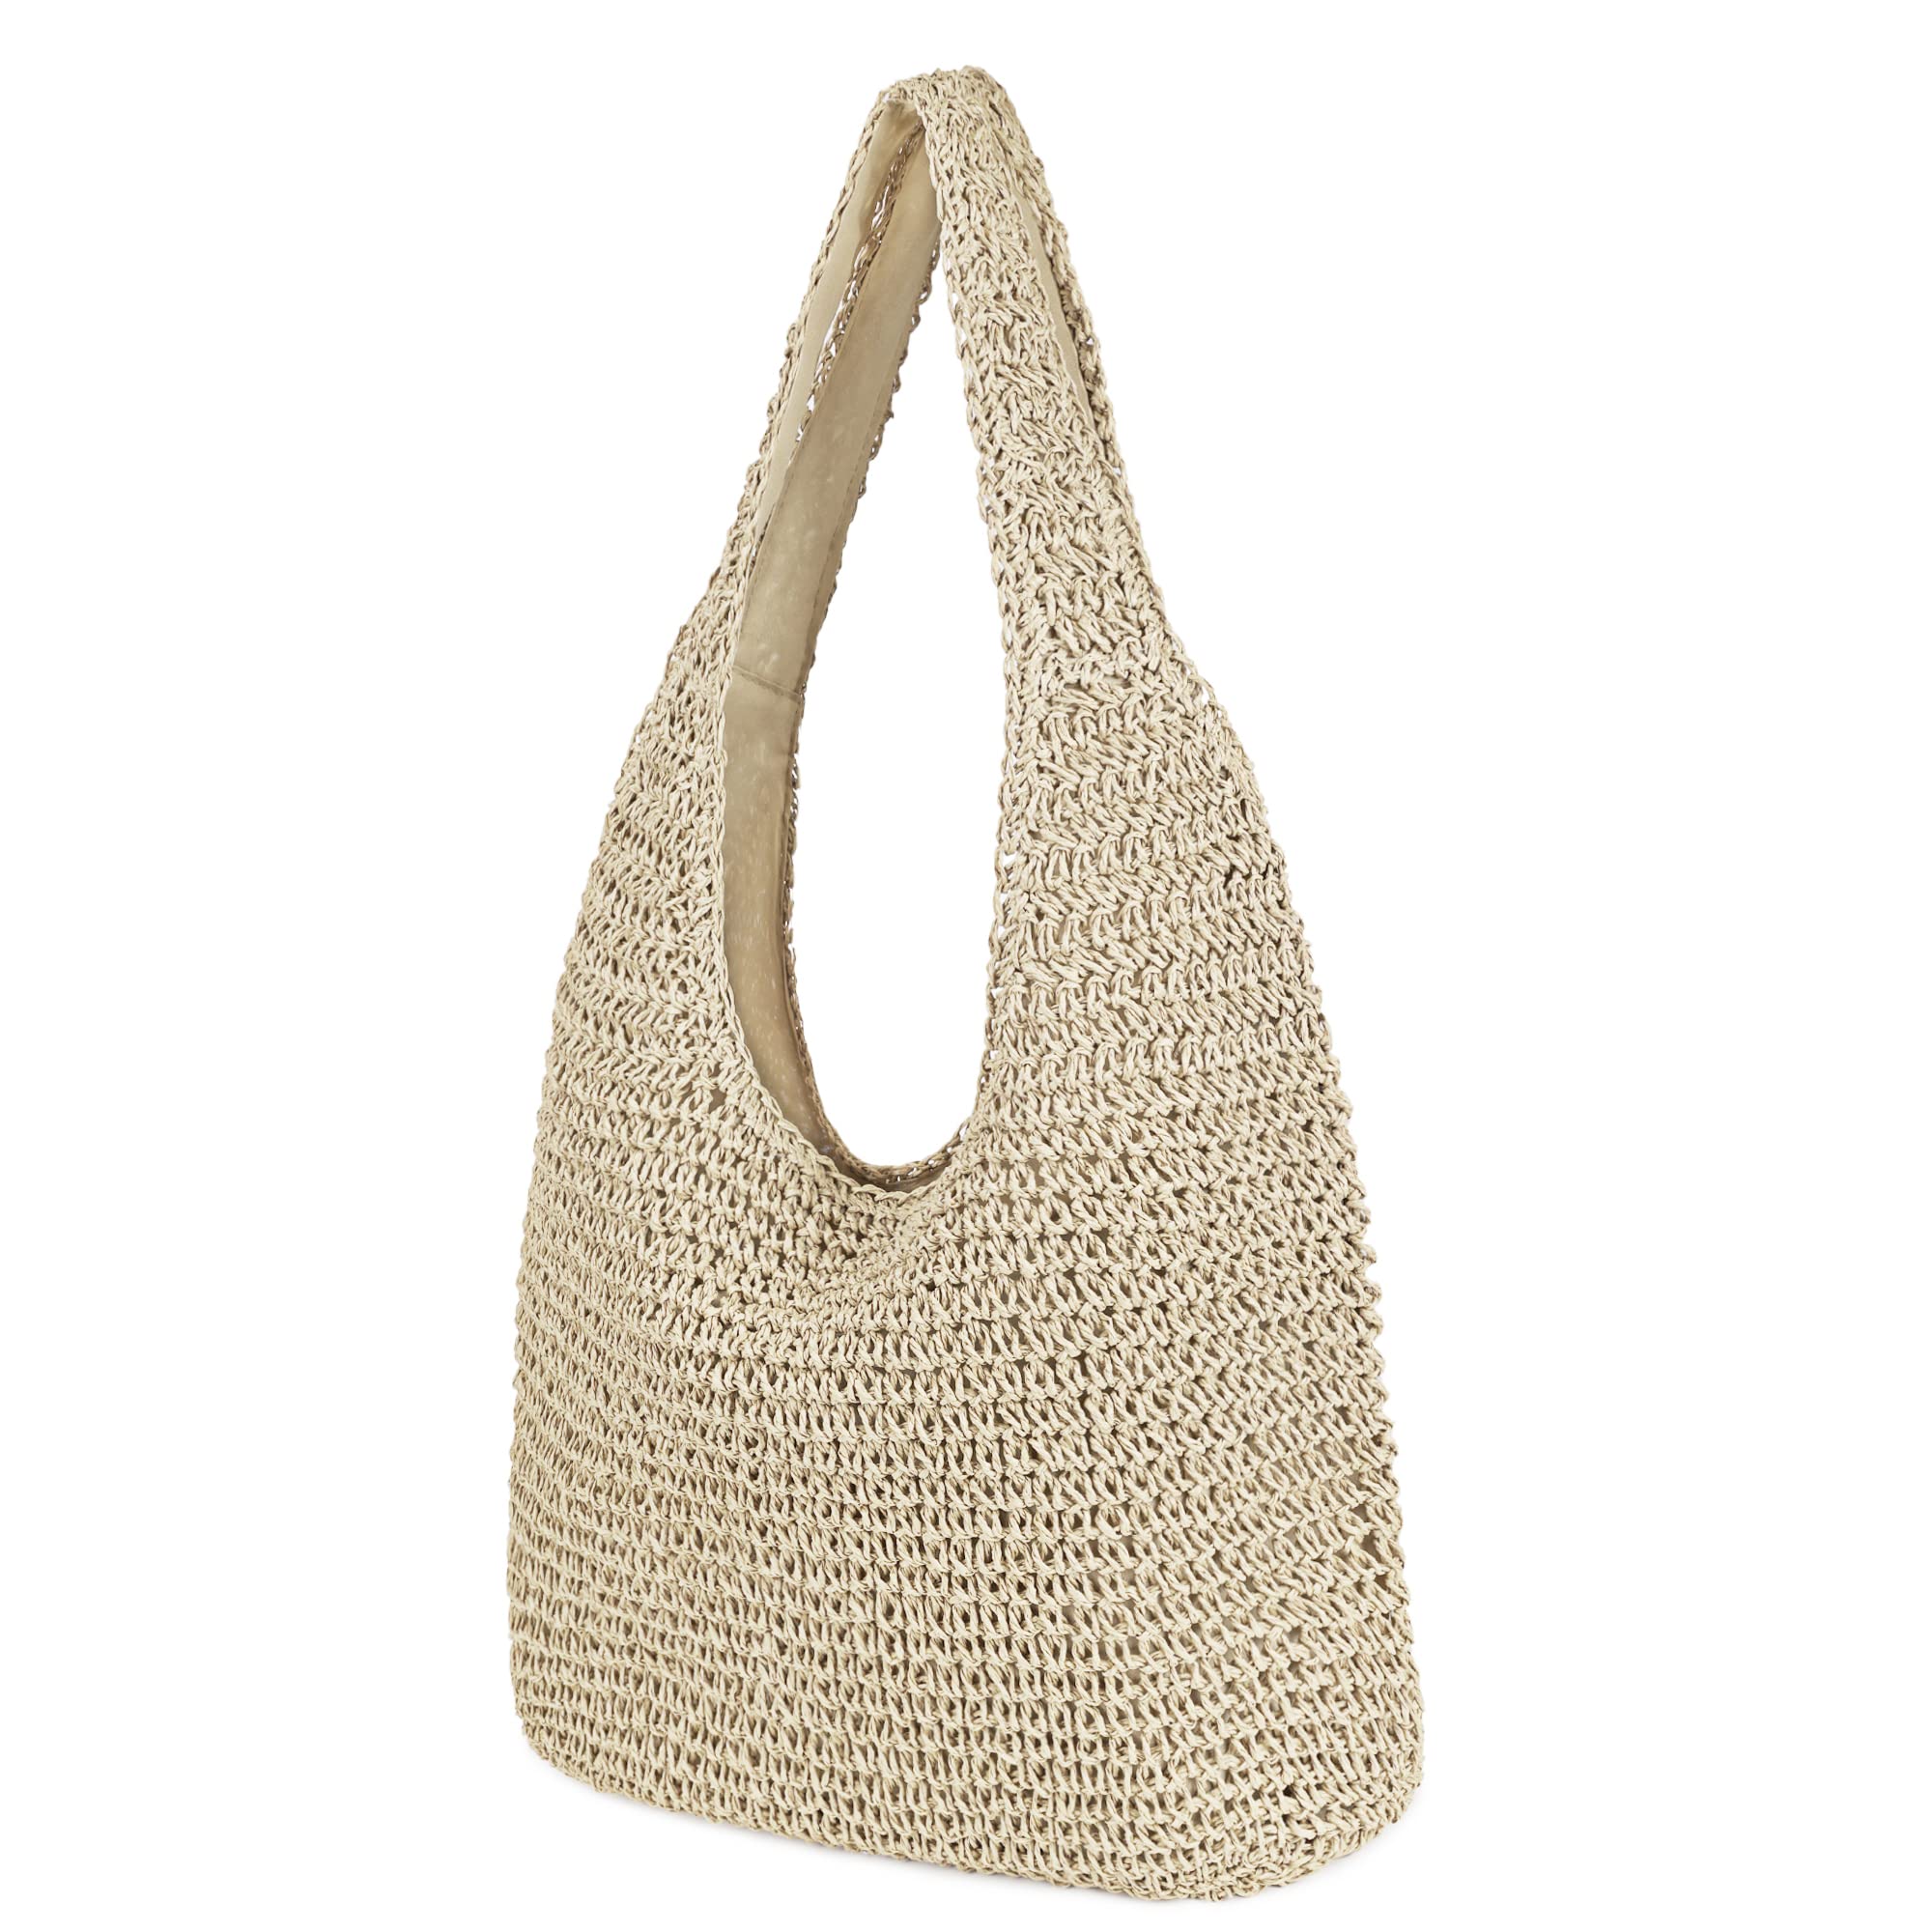 Women Large Straw Beach Bag Handmade Woven Shoulder Bags Hobo Tote Handbag Purse for Summer